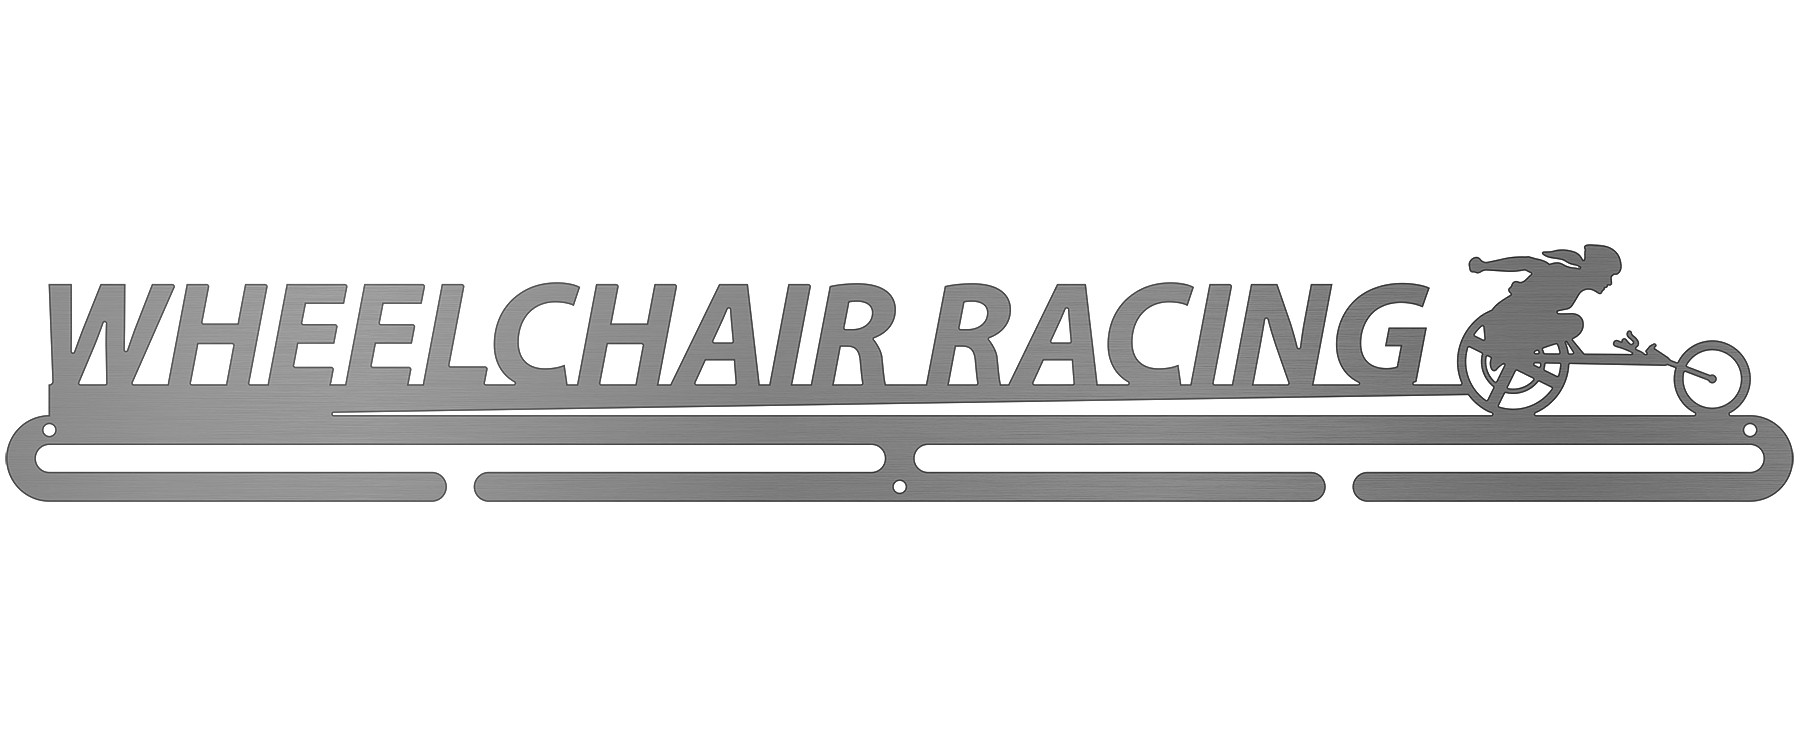 Wheelchair Racing - Female